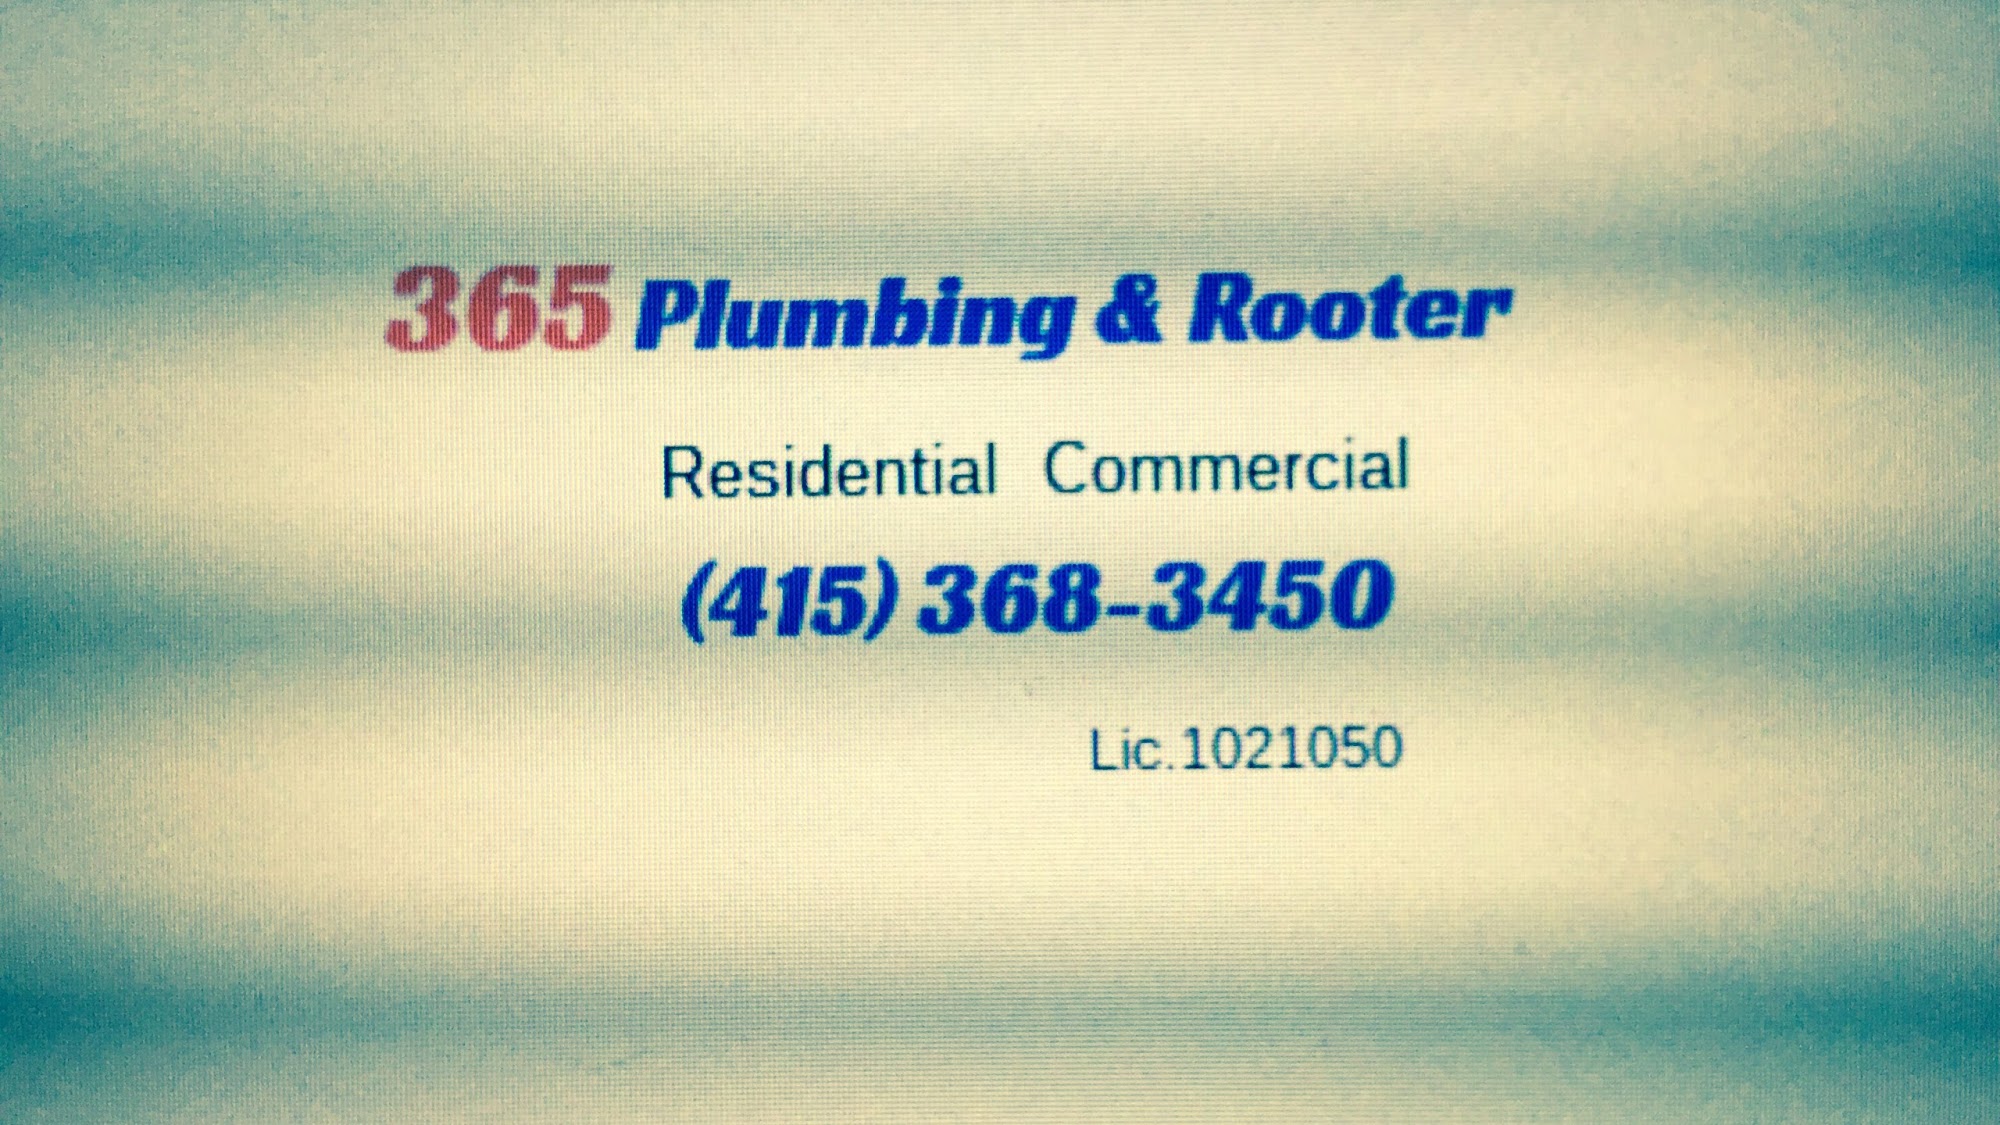 365 Plumbing & Rooter